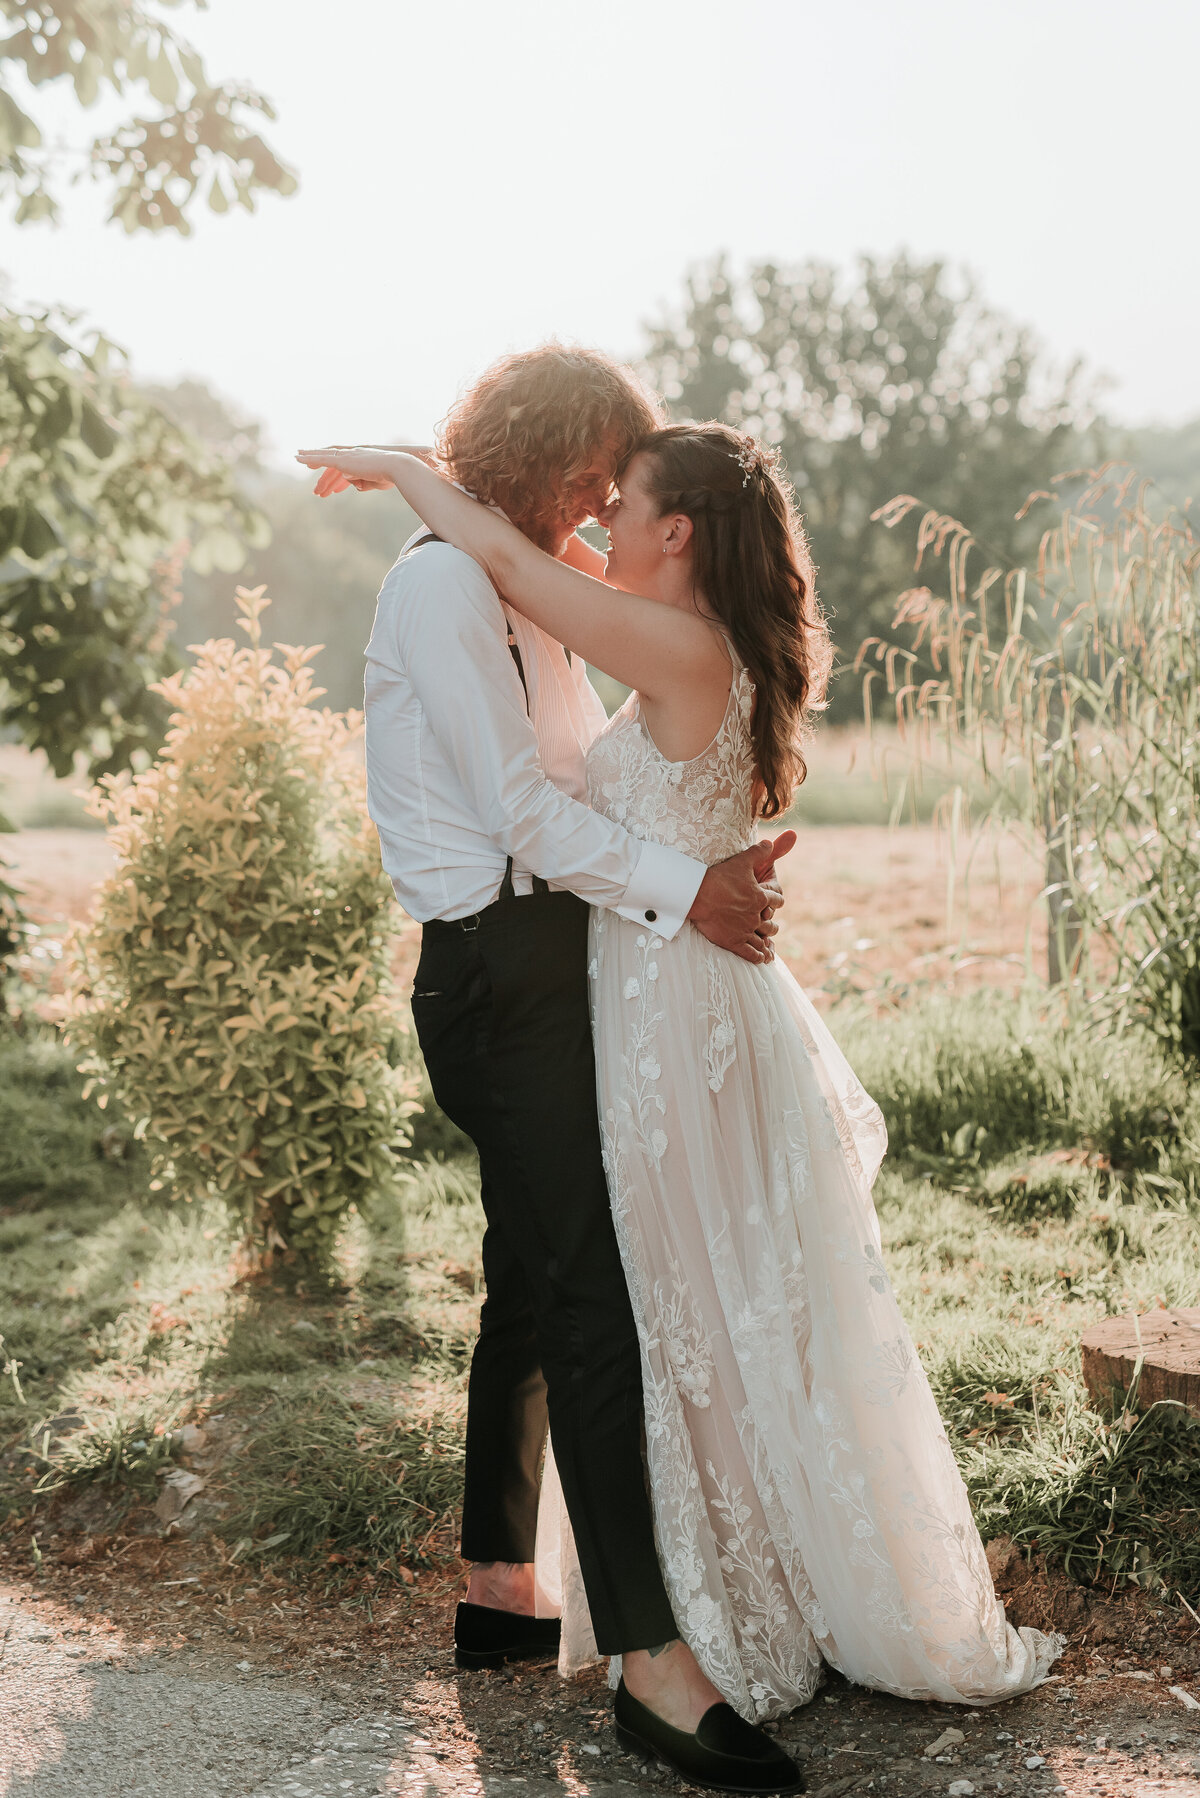 Bride & Groom kiss during golden hour at their barn wedding at Oak Tree Barn Weddings